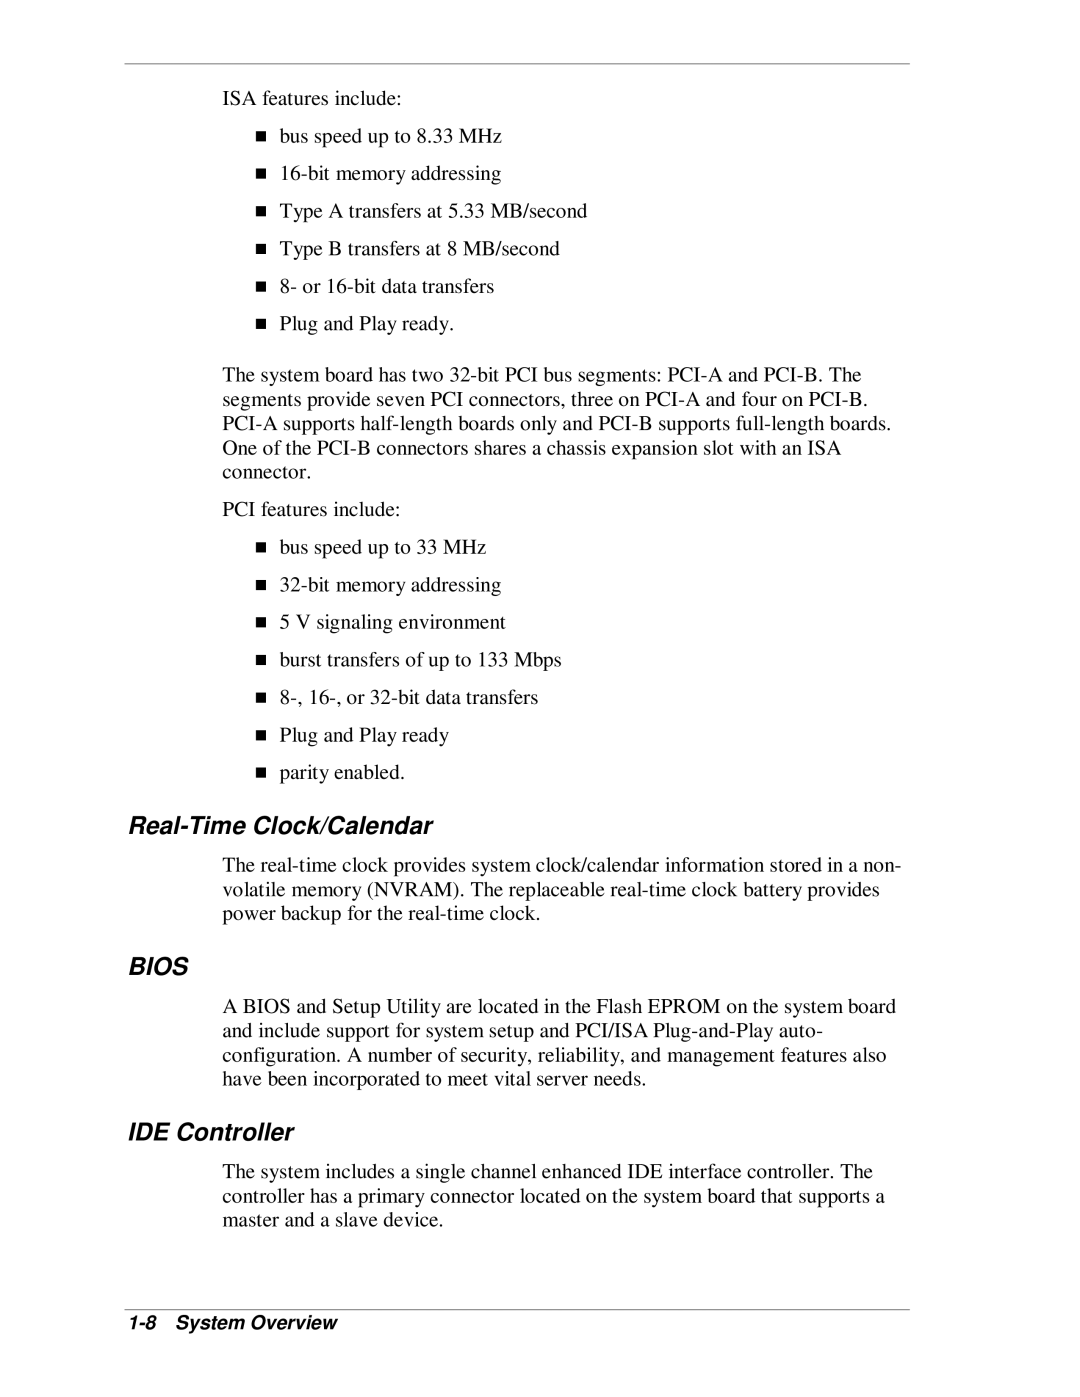 NEC MH4500 manual Real-TimeClock/Calendar, Bios, IDE Controller 